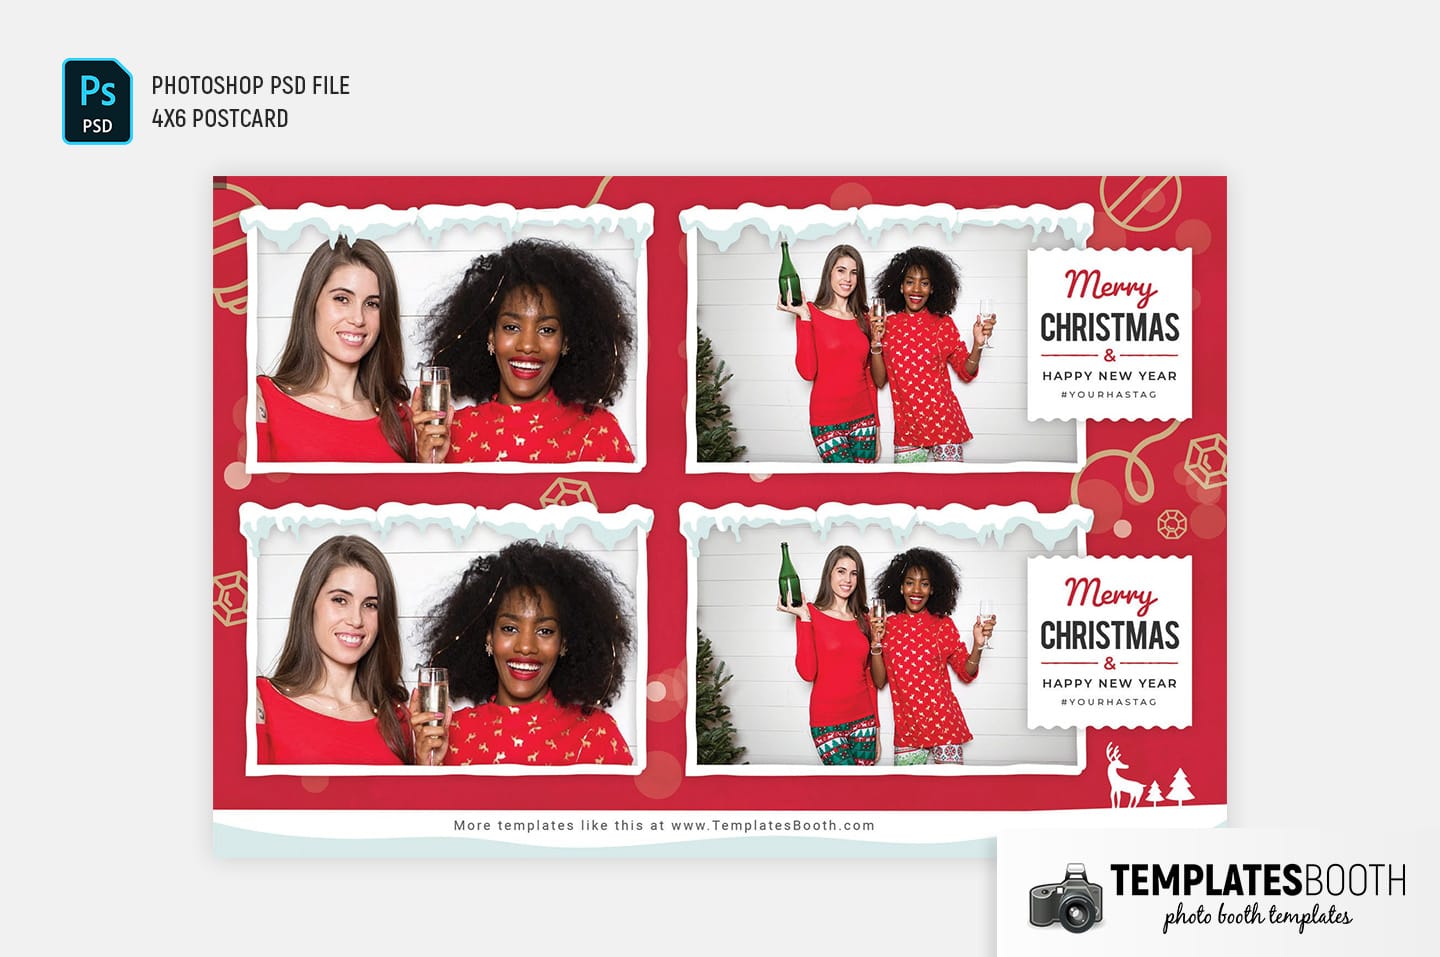 Merry Christmas Photo Booth Template (4x6 postcard)